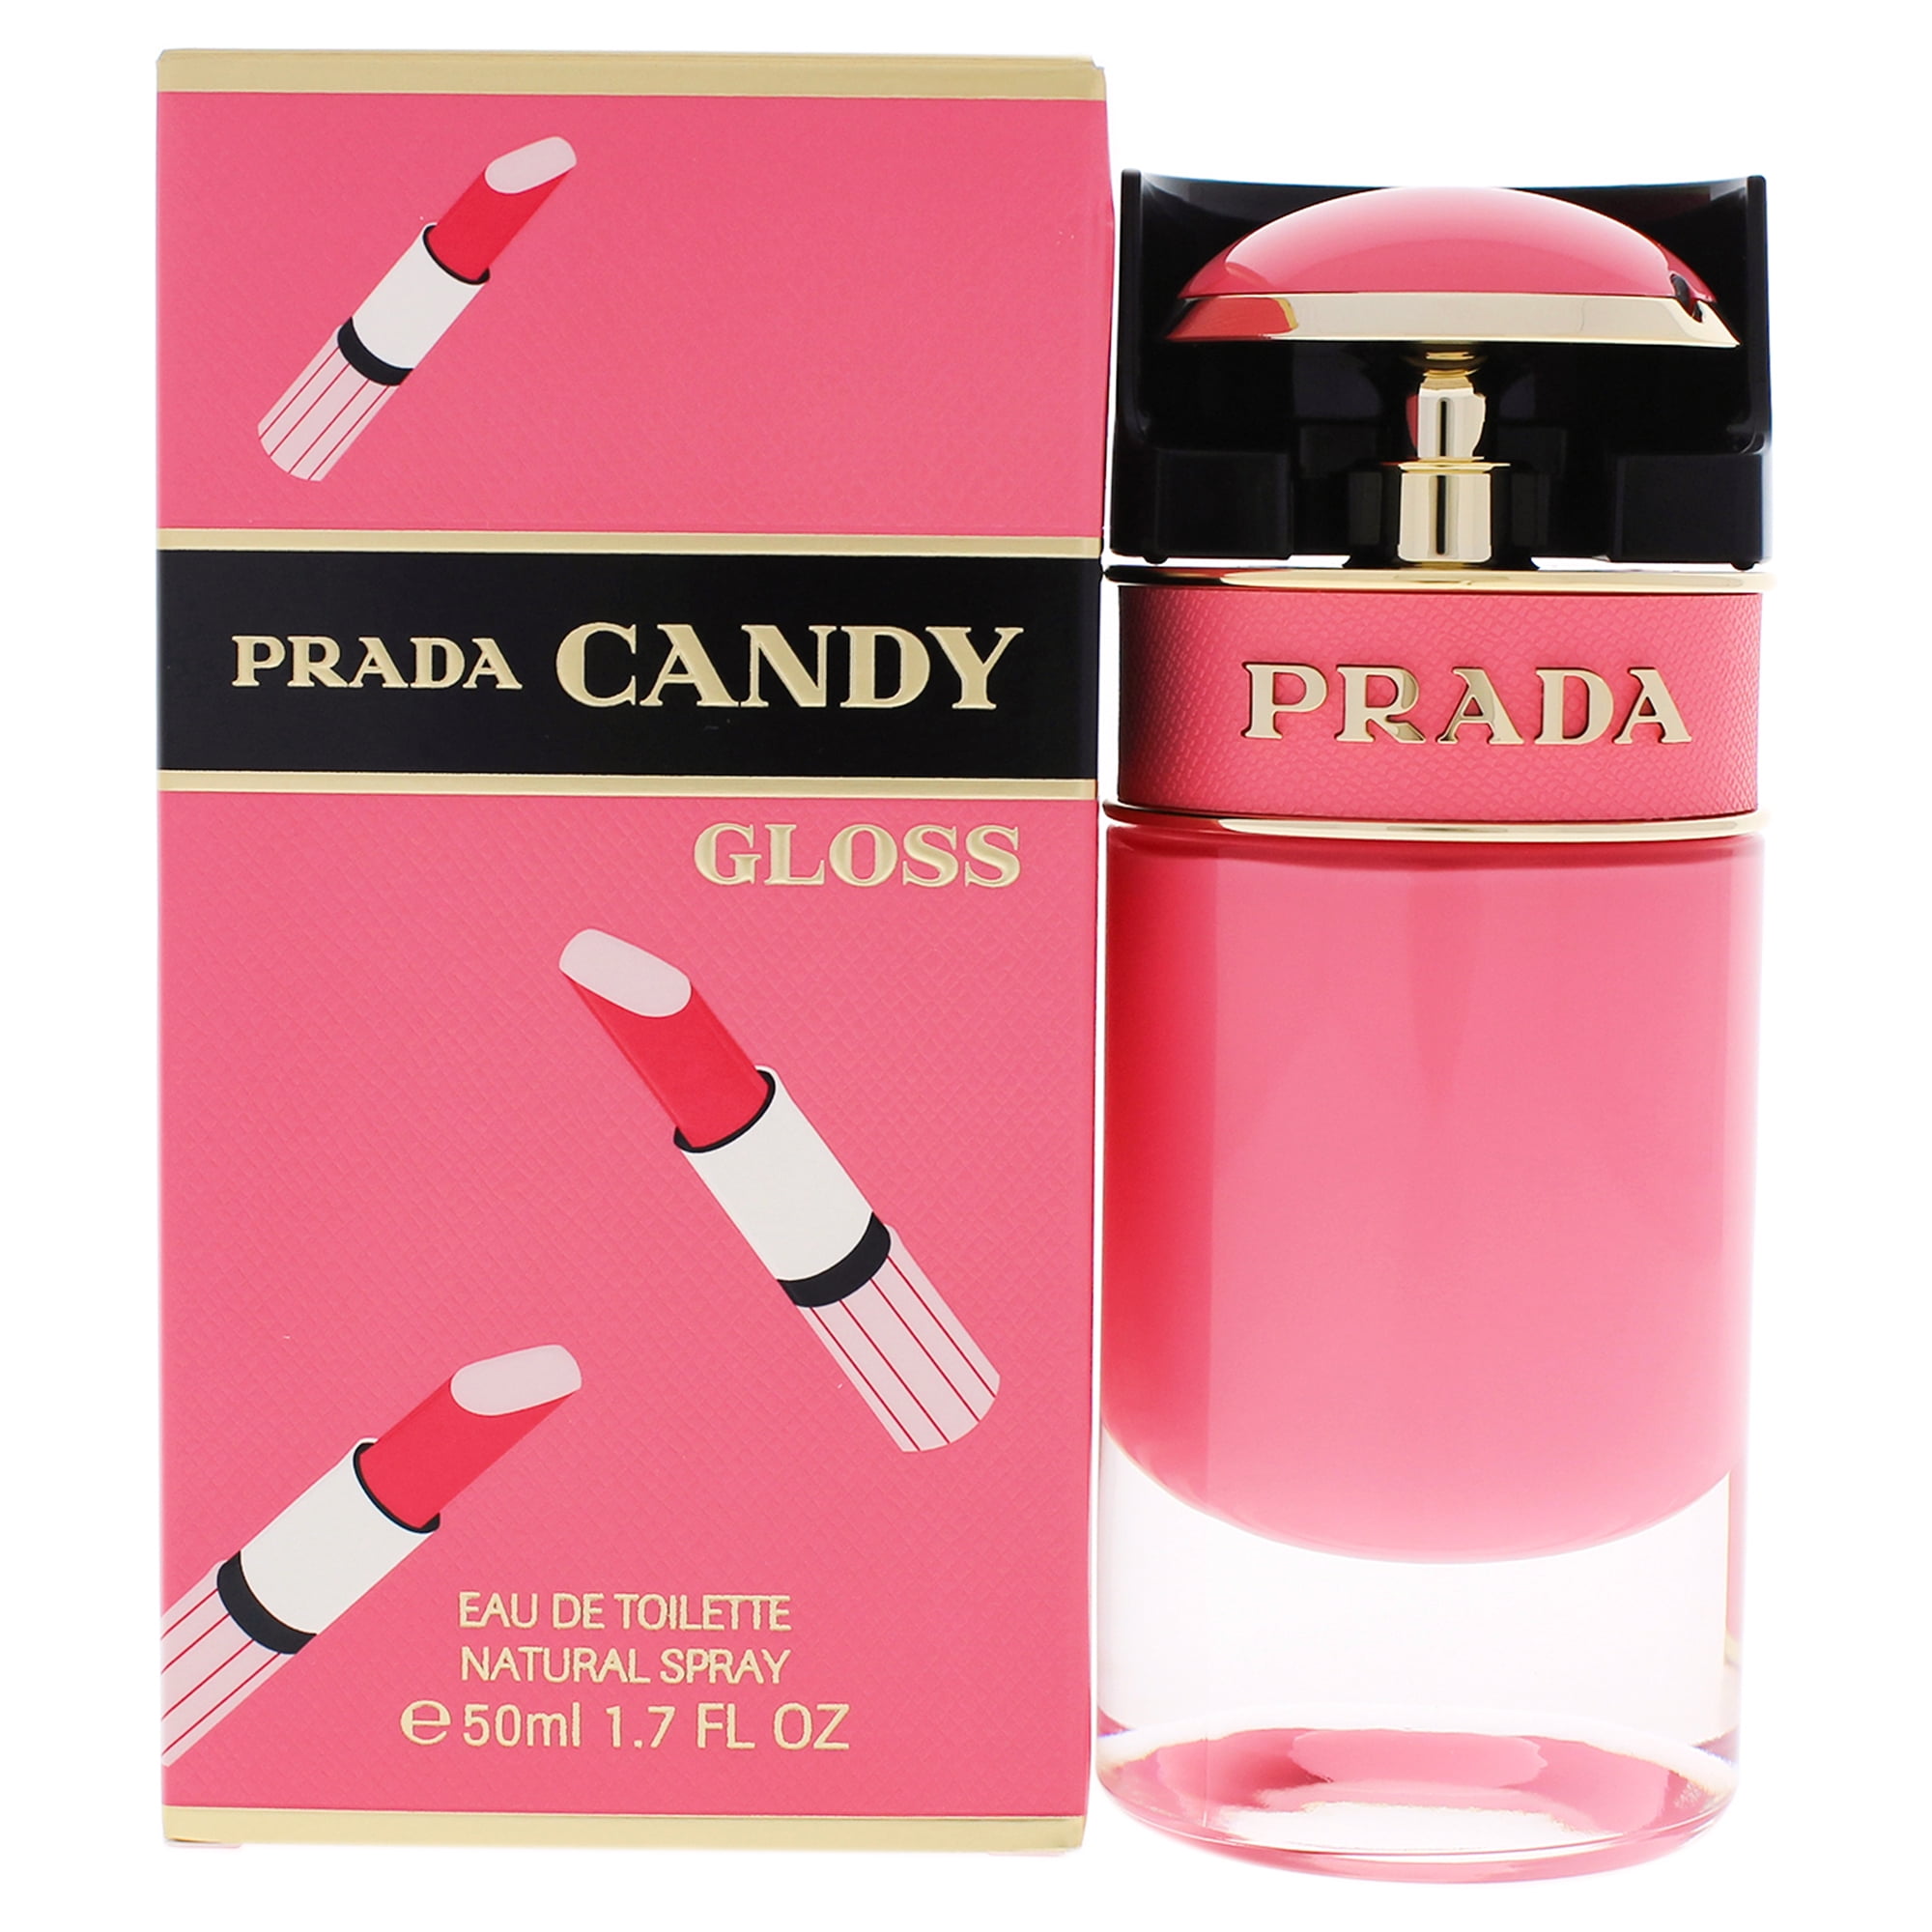 Prada - Prada Candy Gloss by Prada for Women - 1.7 oz EDT Spray